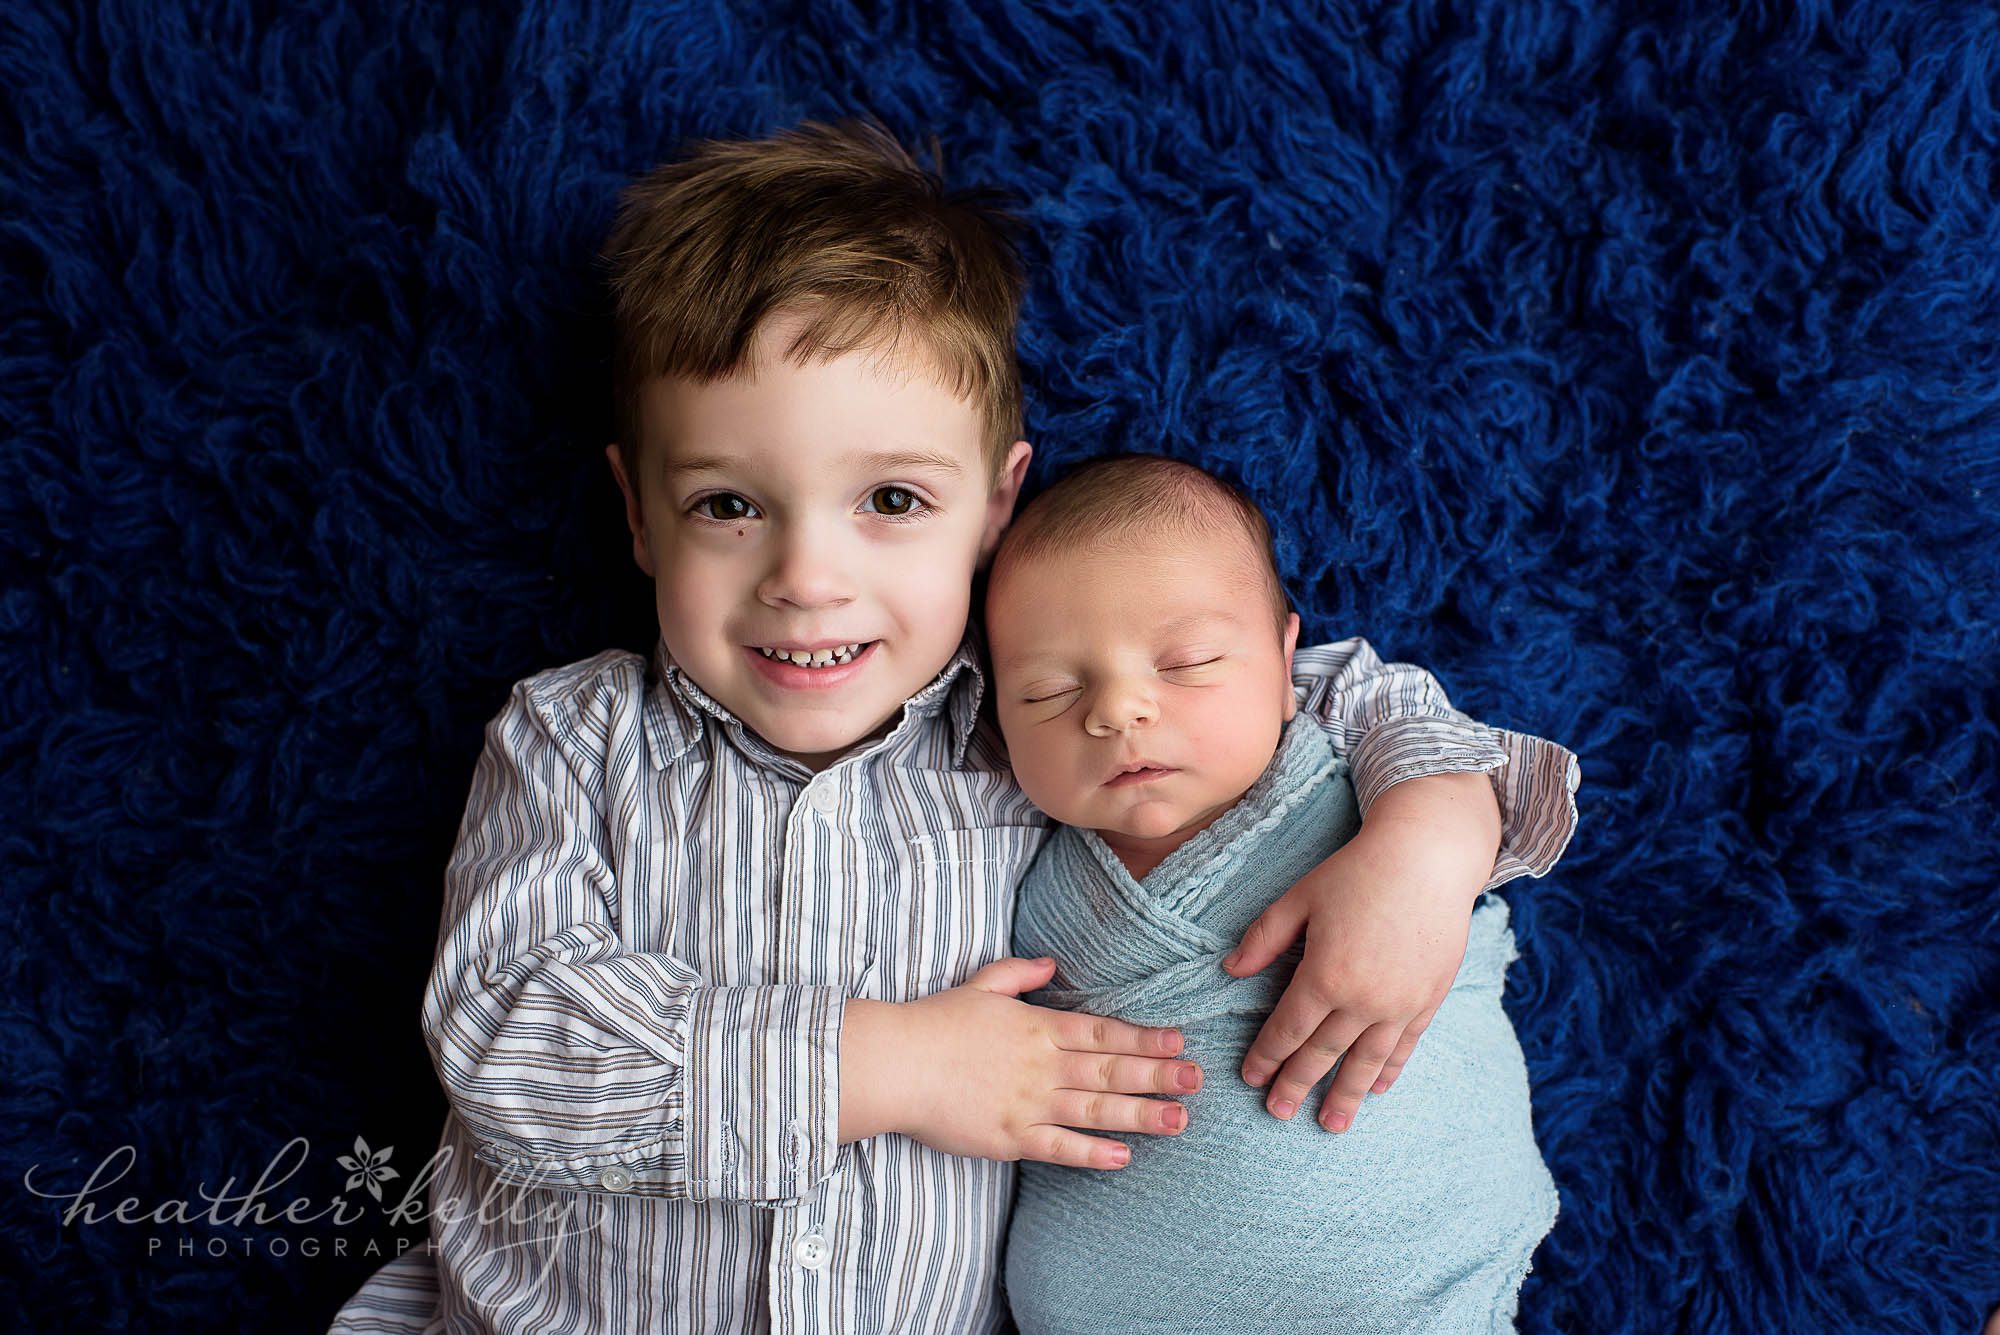 newborn sibling portrait. Derby baby boy ct newborn photography